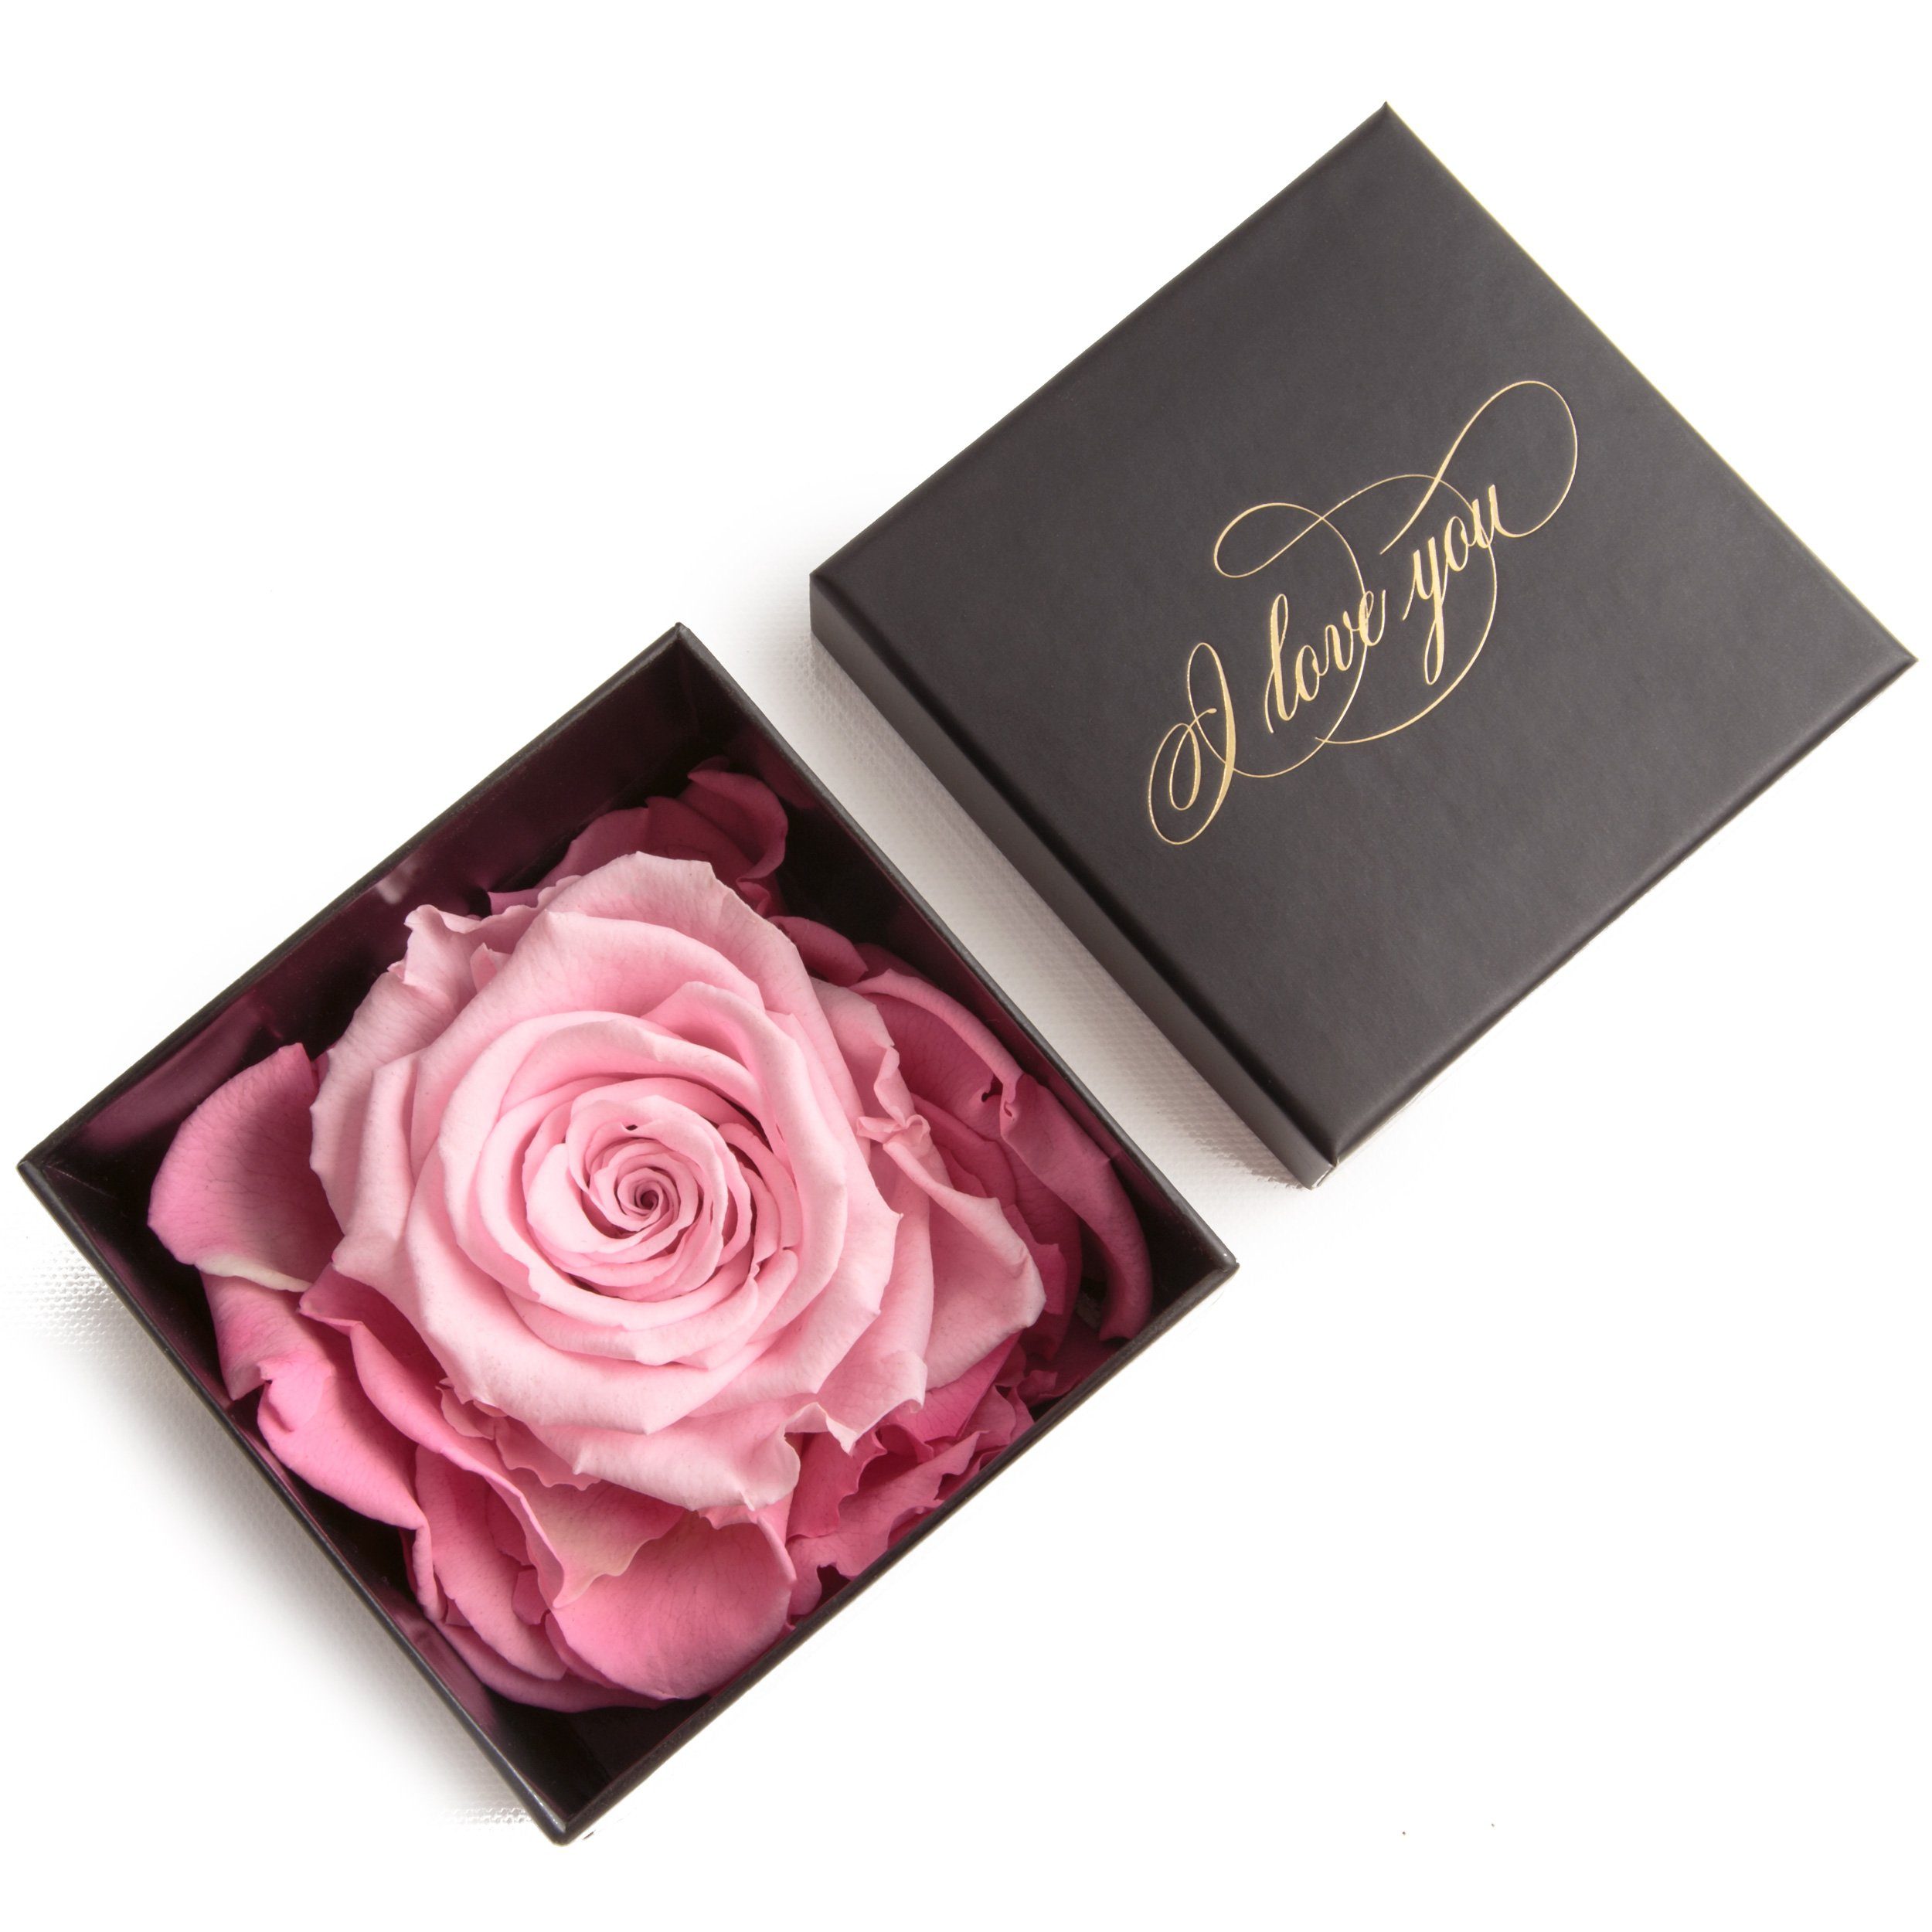 Kunstblume Infinity Rose Box I Love You Geschenk Idee Liebesbeweis Rose, ROSEMARIE SCHULZ Heidelberg, Höhe 6 cm, Echte Rose konserviert Rosa